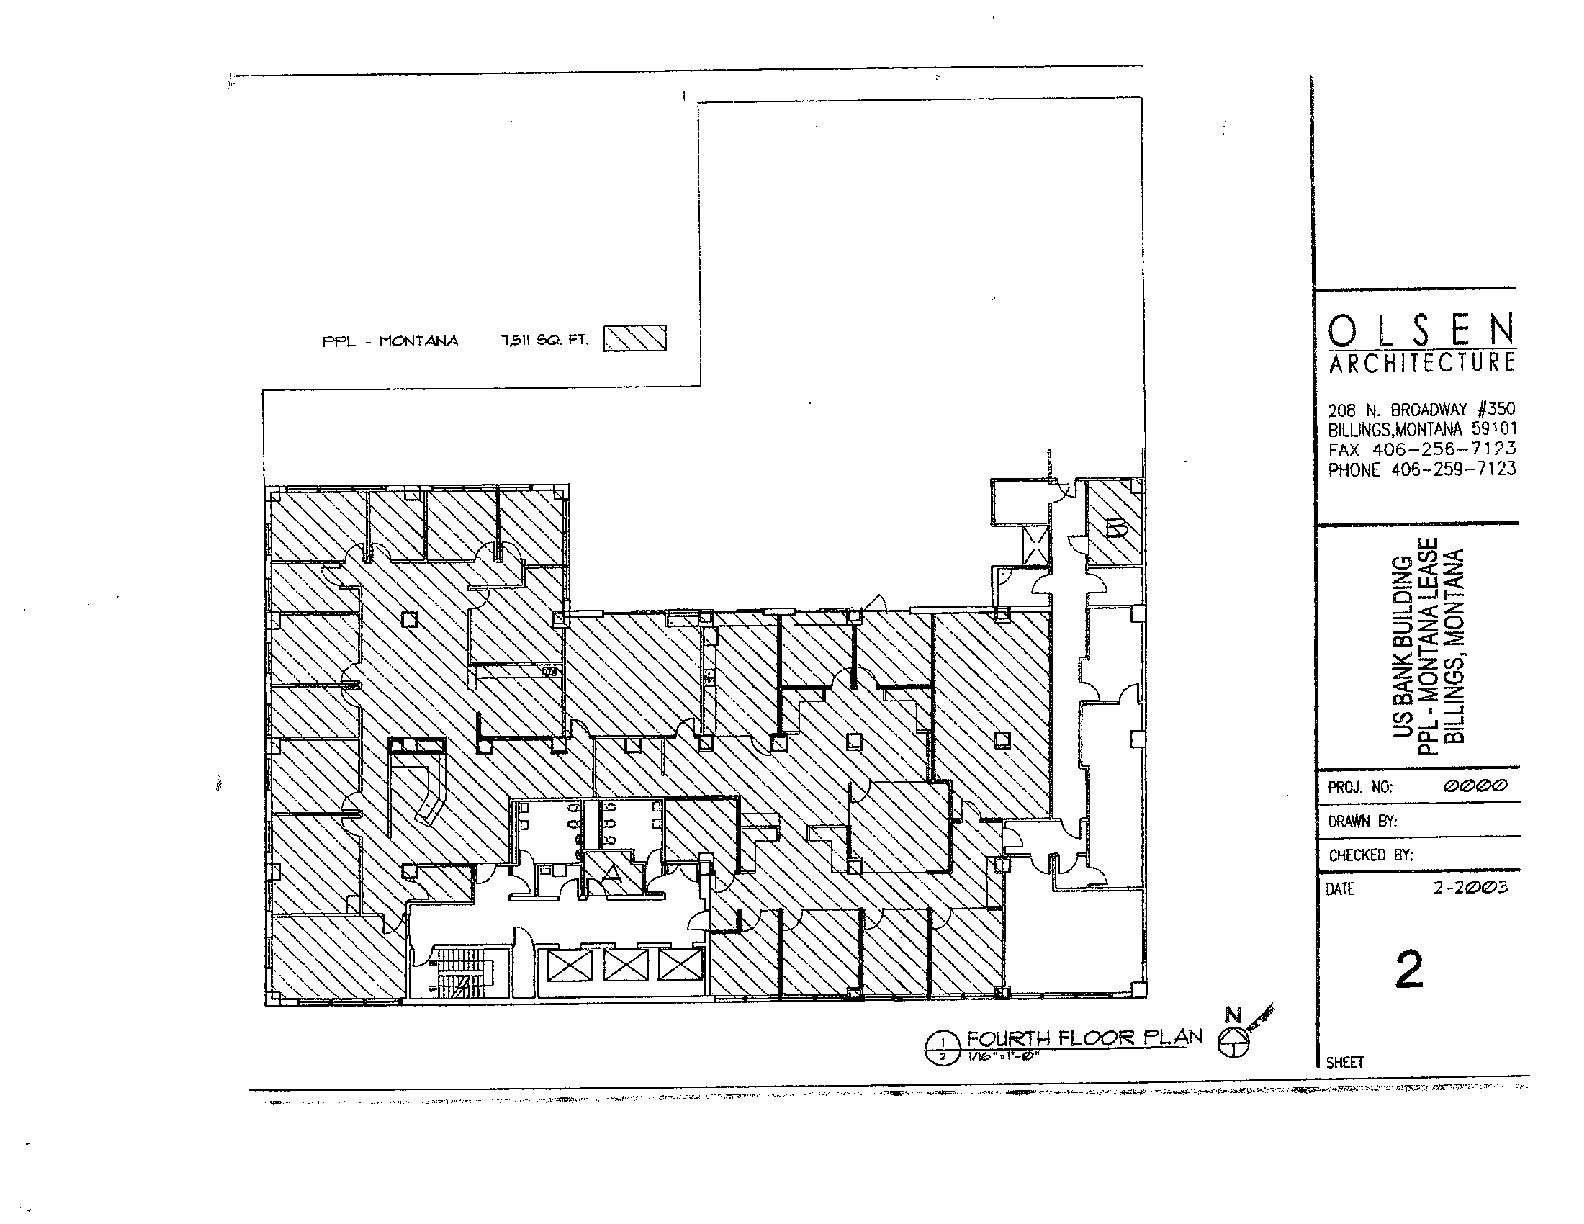 303 N Broadway. Fourth floor plan